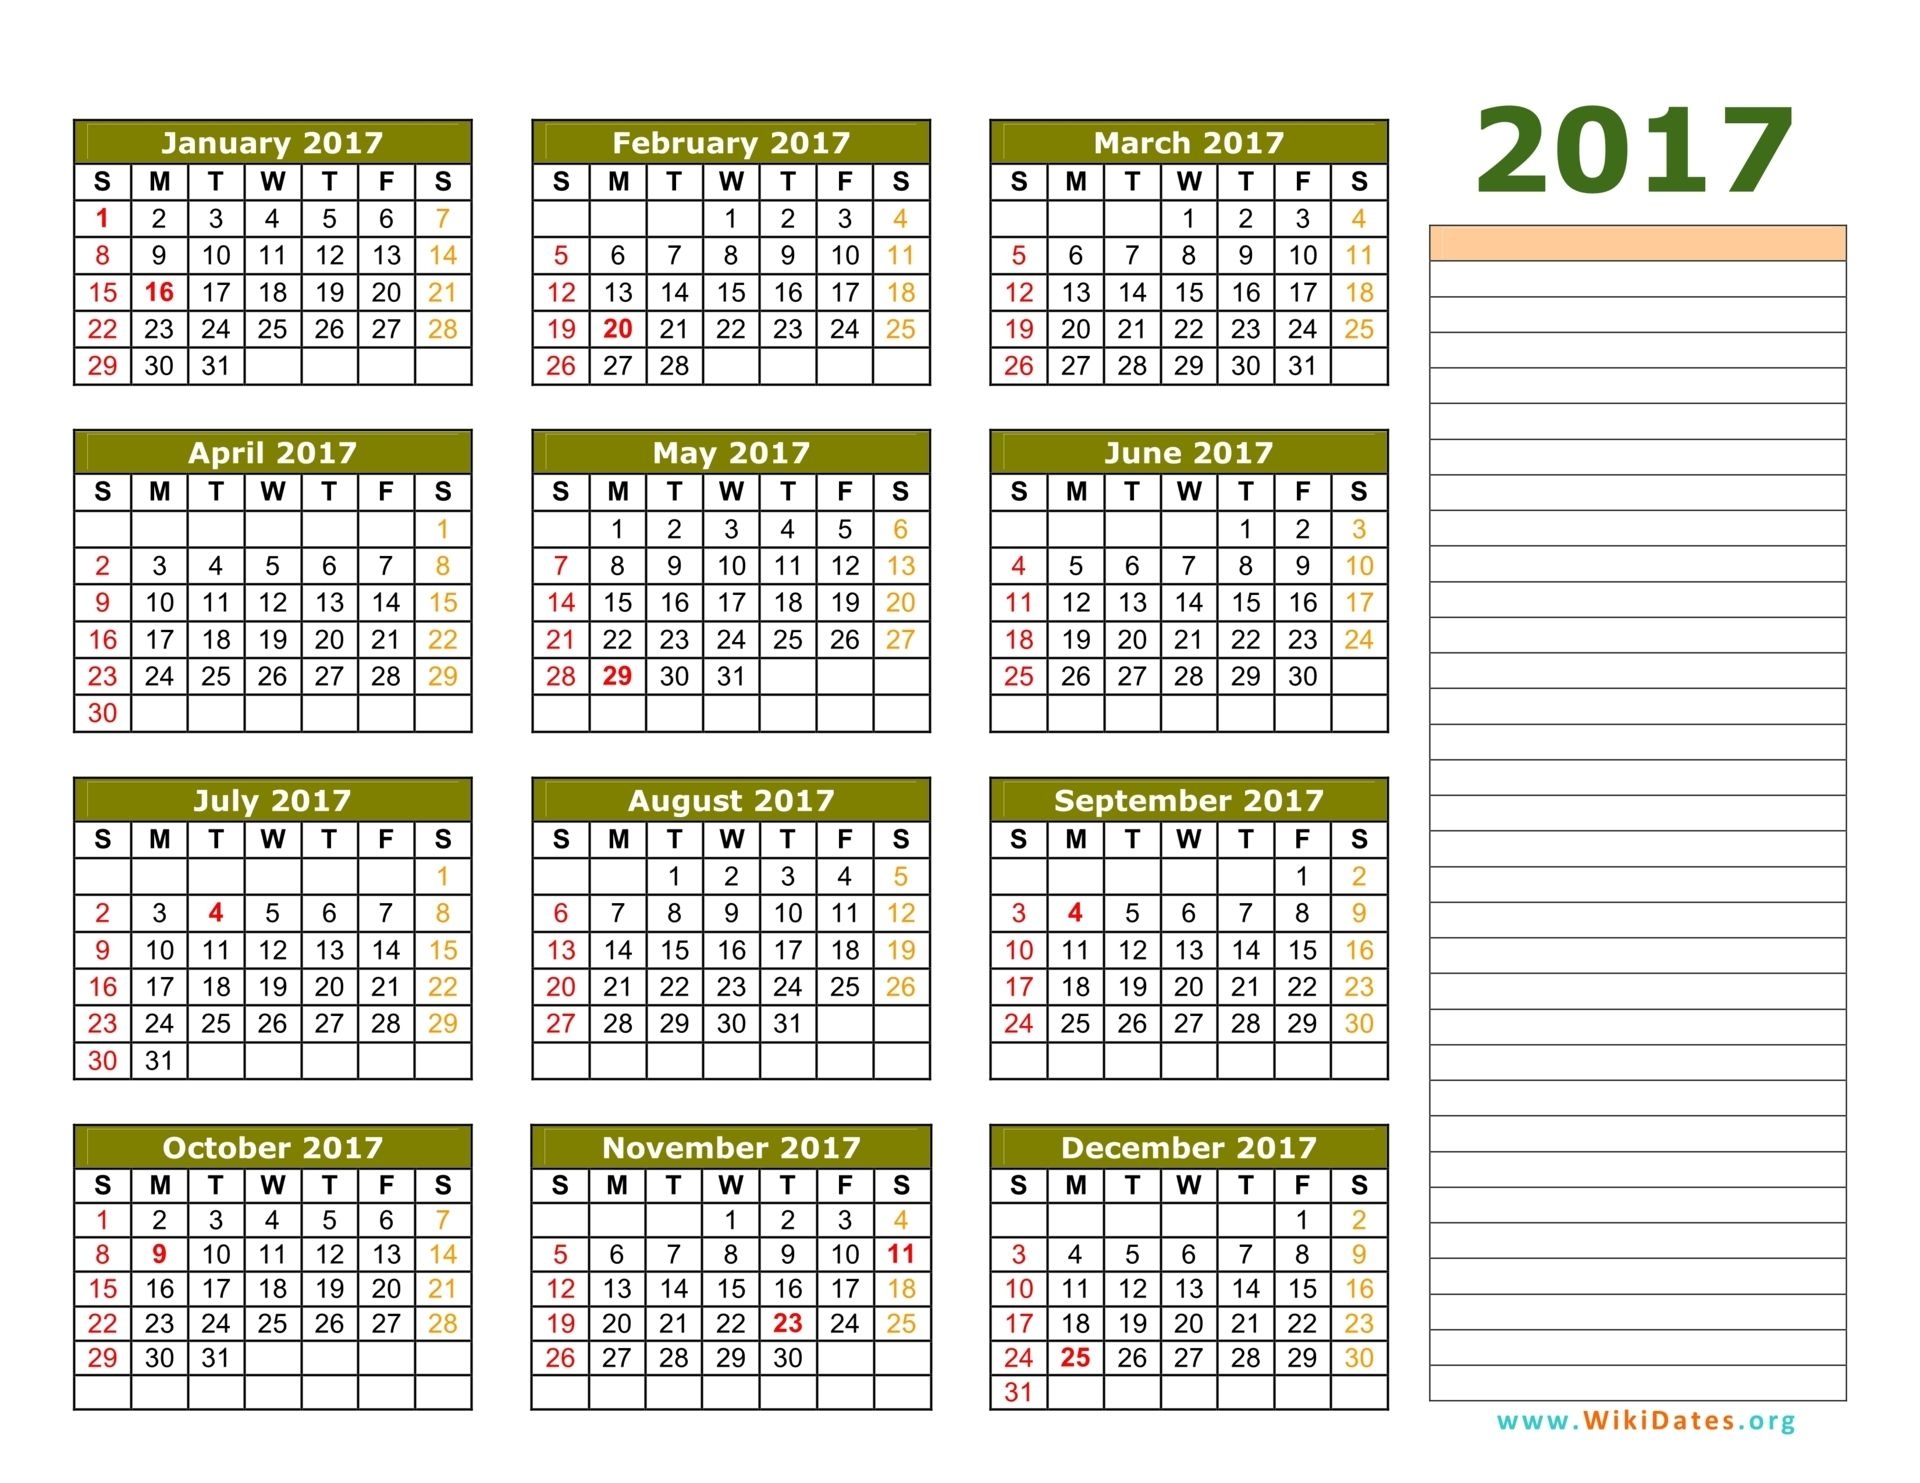 2017 calendar | wikidates